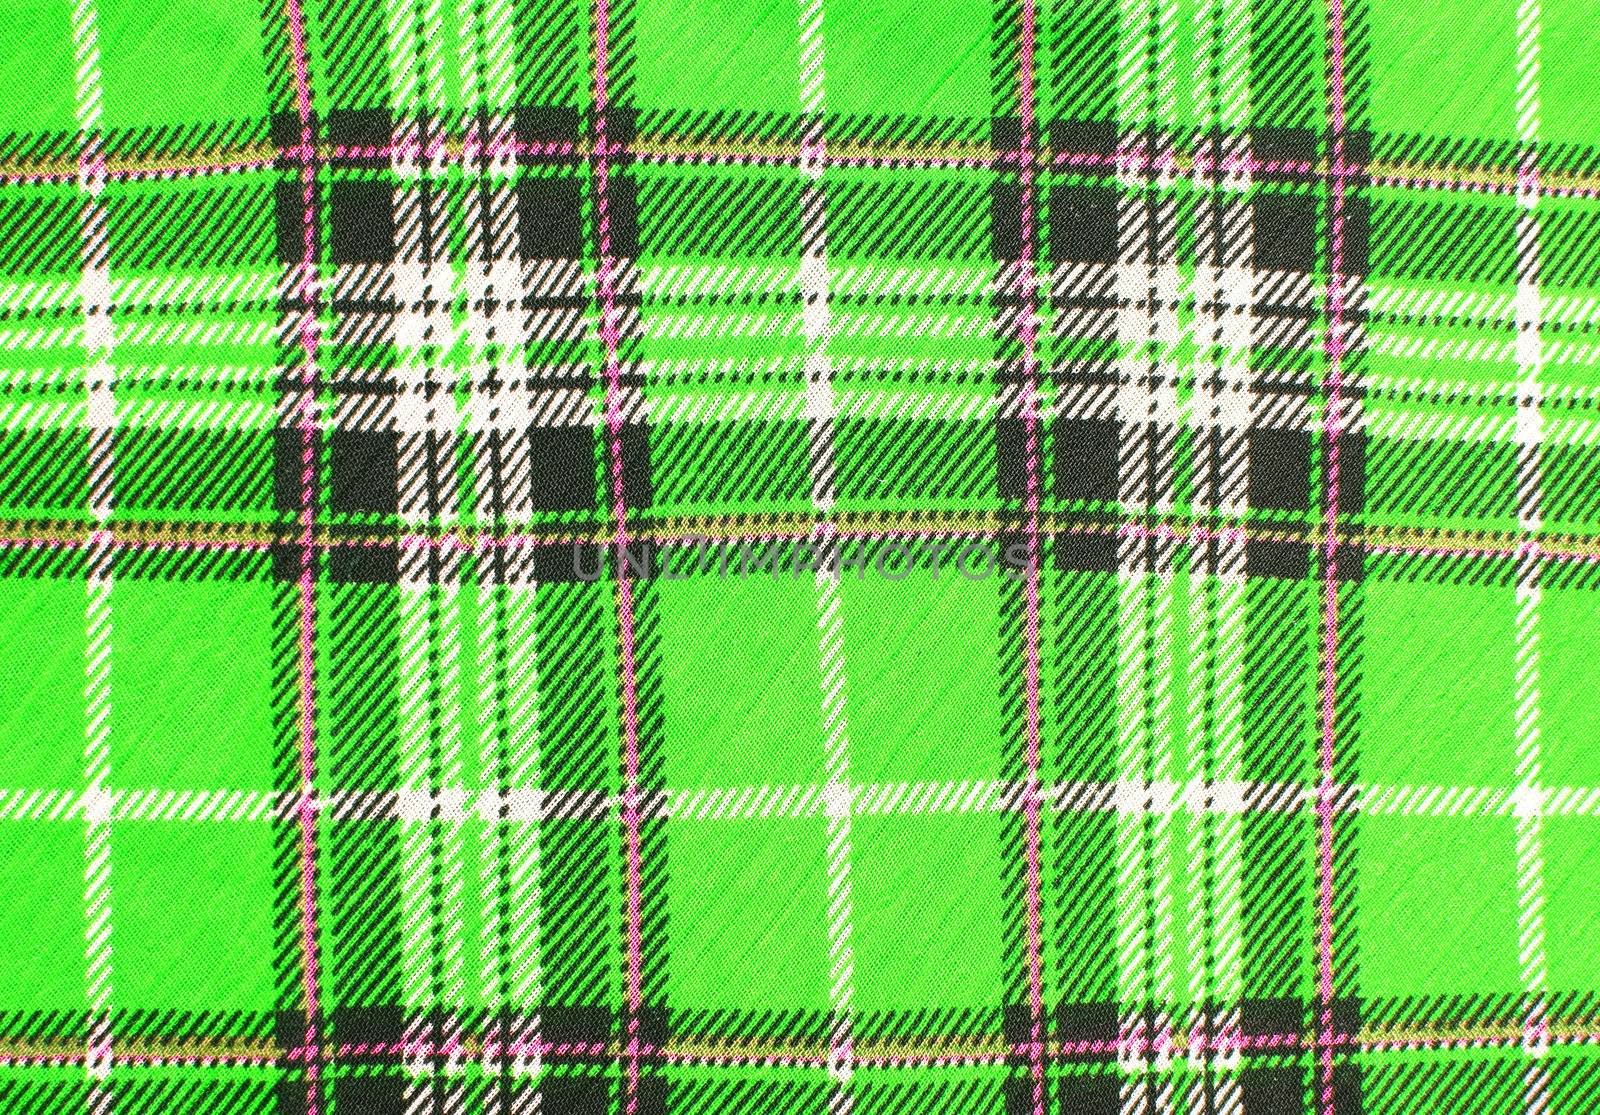 Green tartan fabric texture 